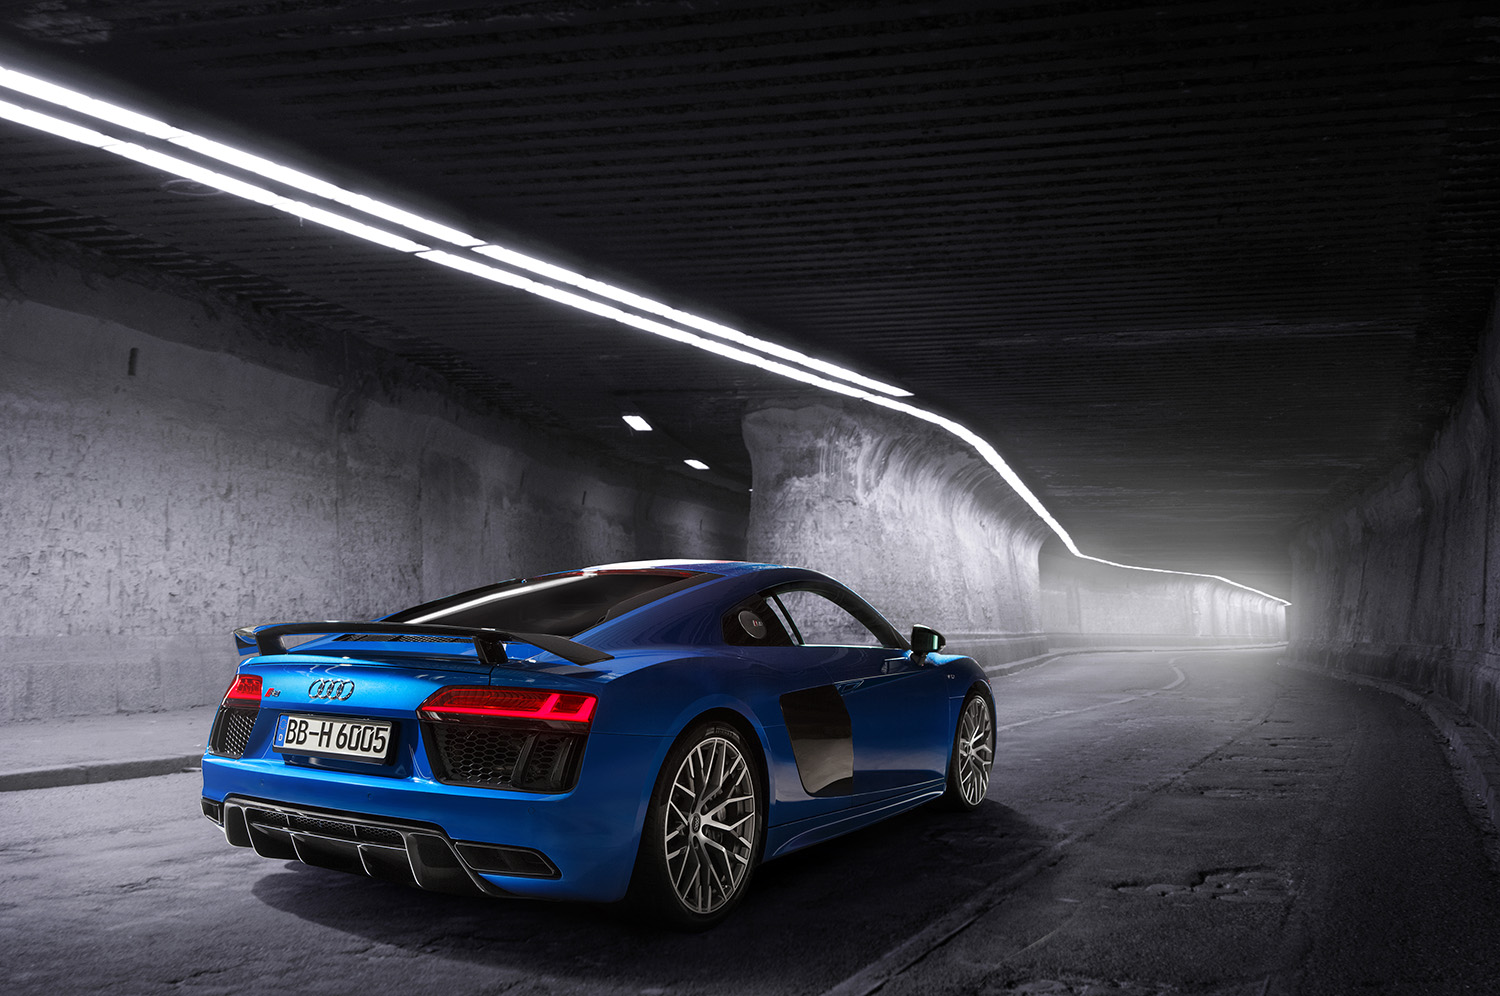 Audi R8 plus in tunnel